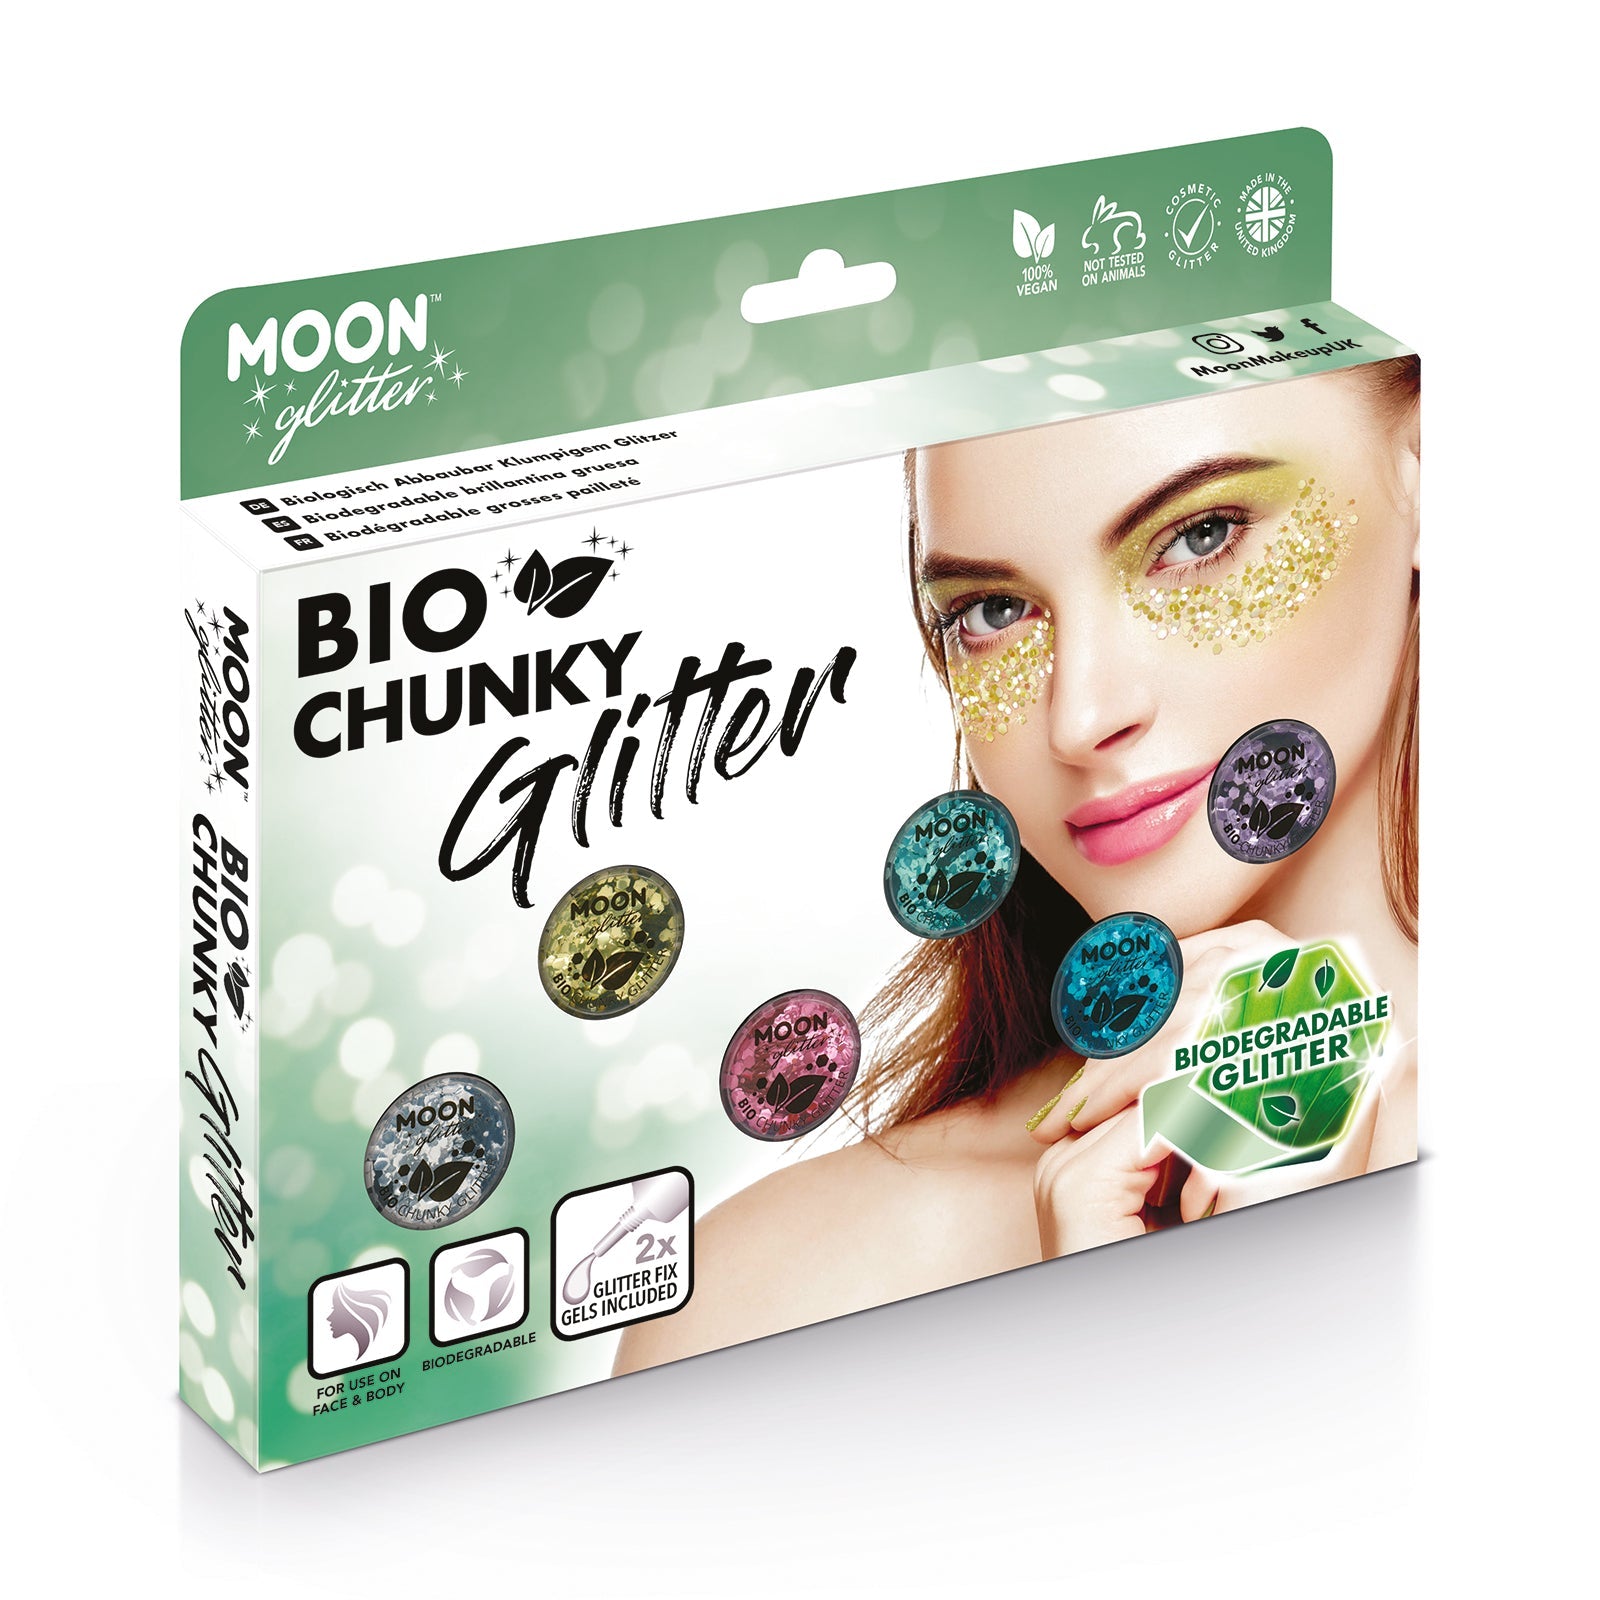 Bio Chunky Face & Body Glitter Boxset - 6 Face & Body Glitter, 2 Fix Gel. Cosmetically certified, FDA & Health Canada compliant, cruelty free and vegan.